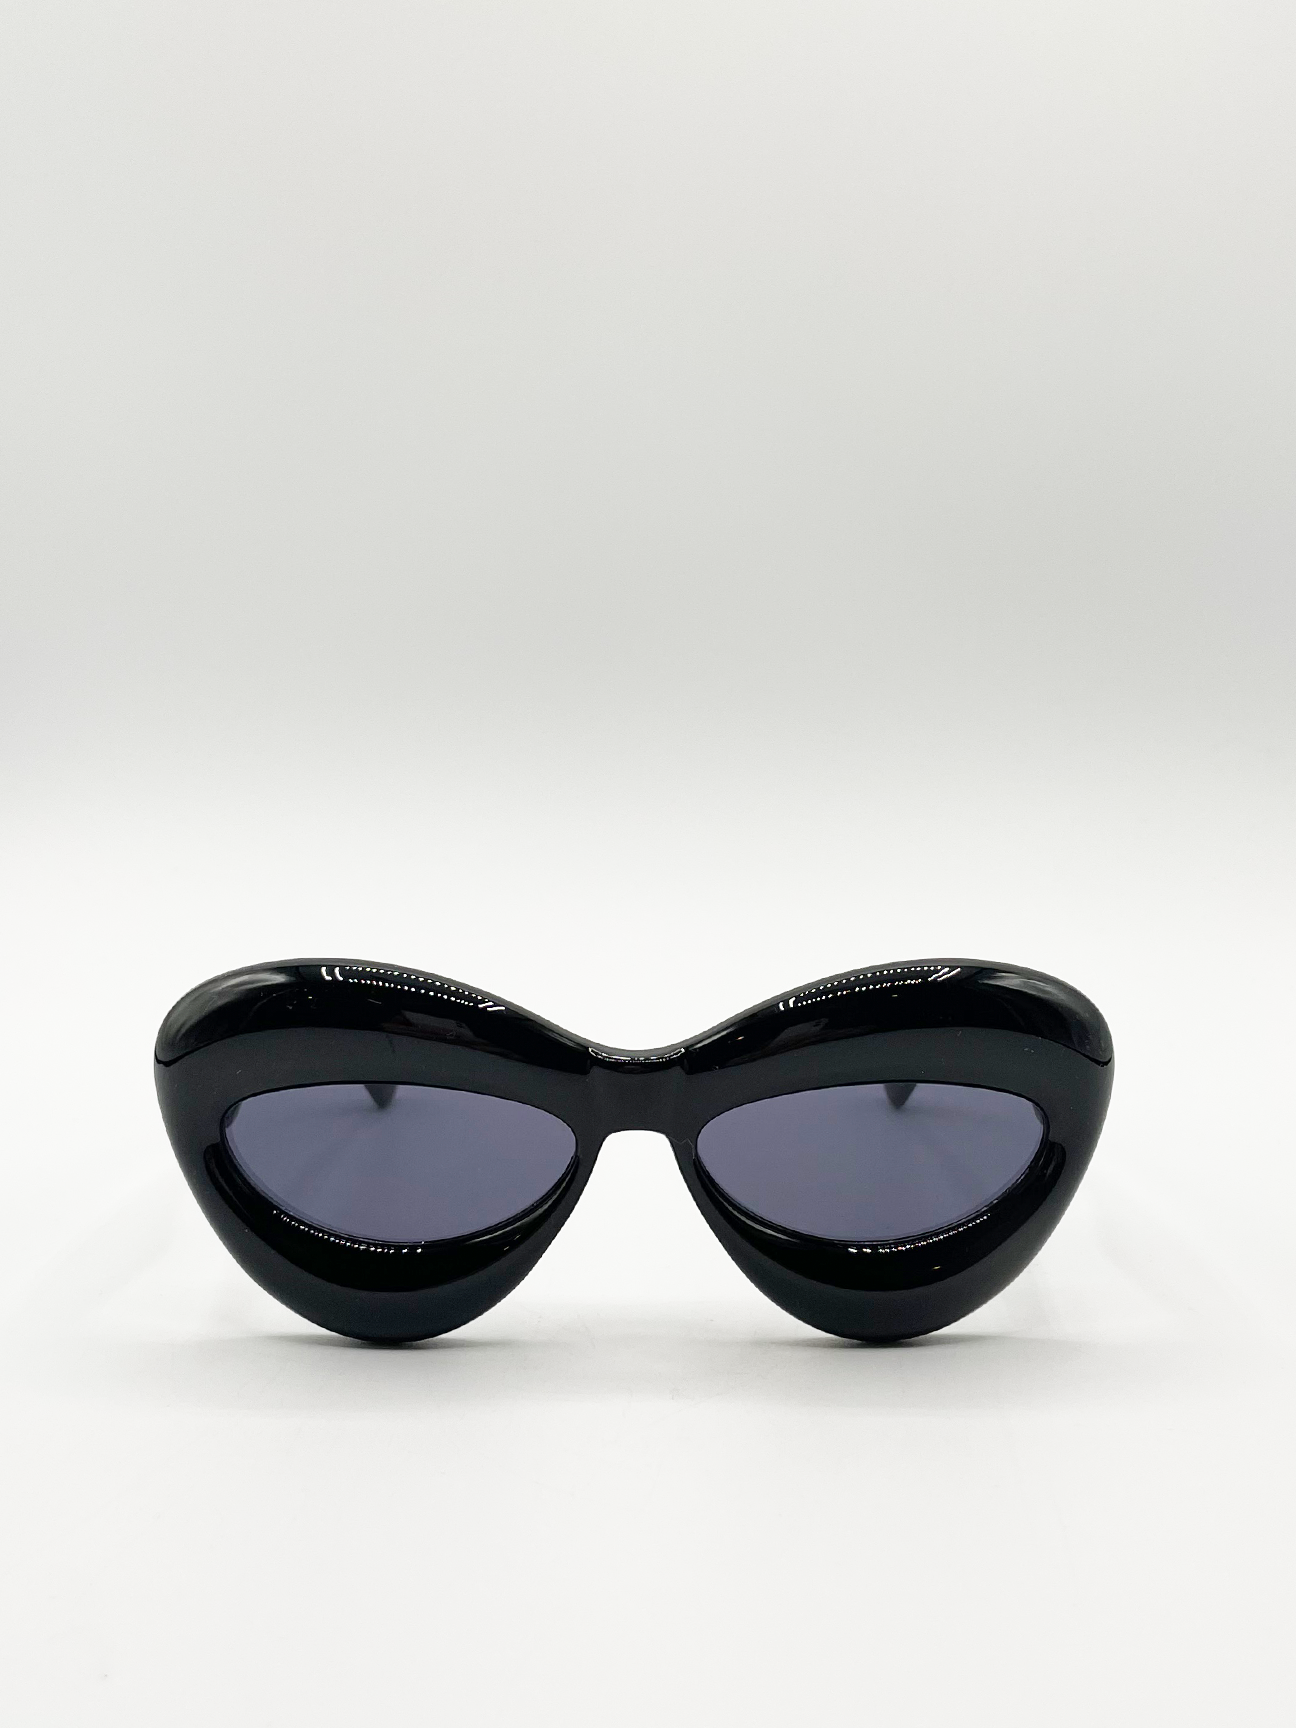 Chunky sunglasses in black